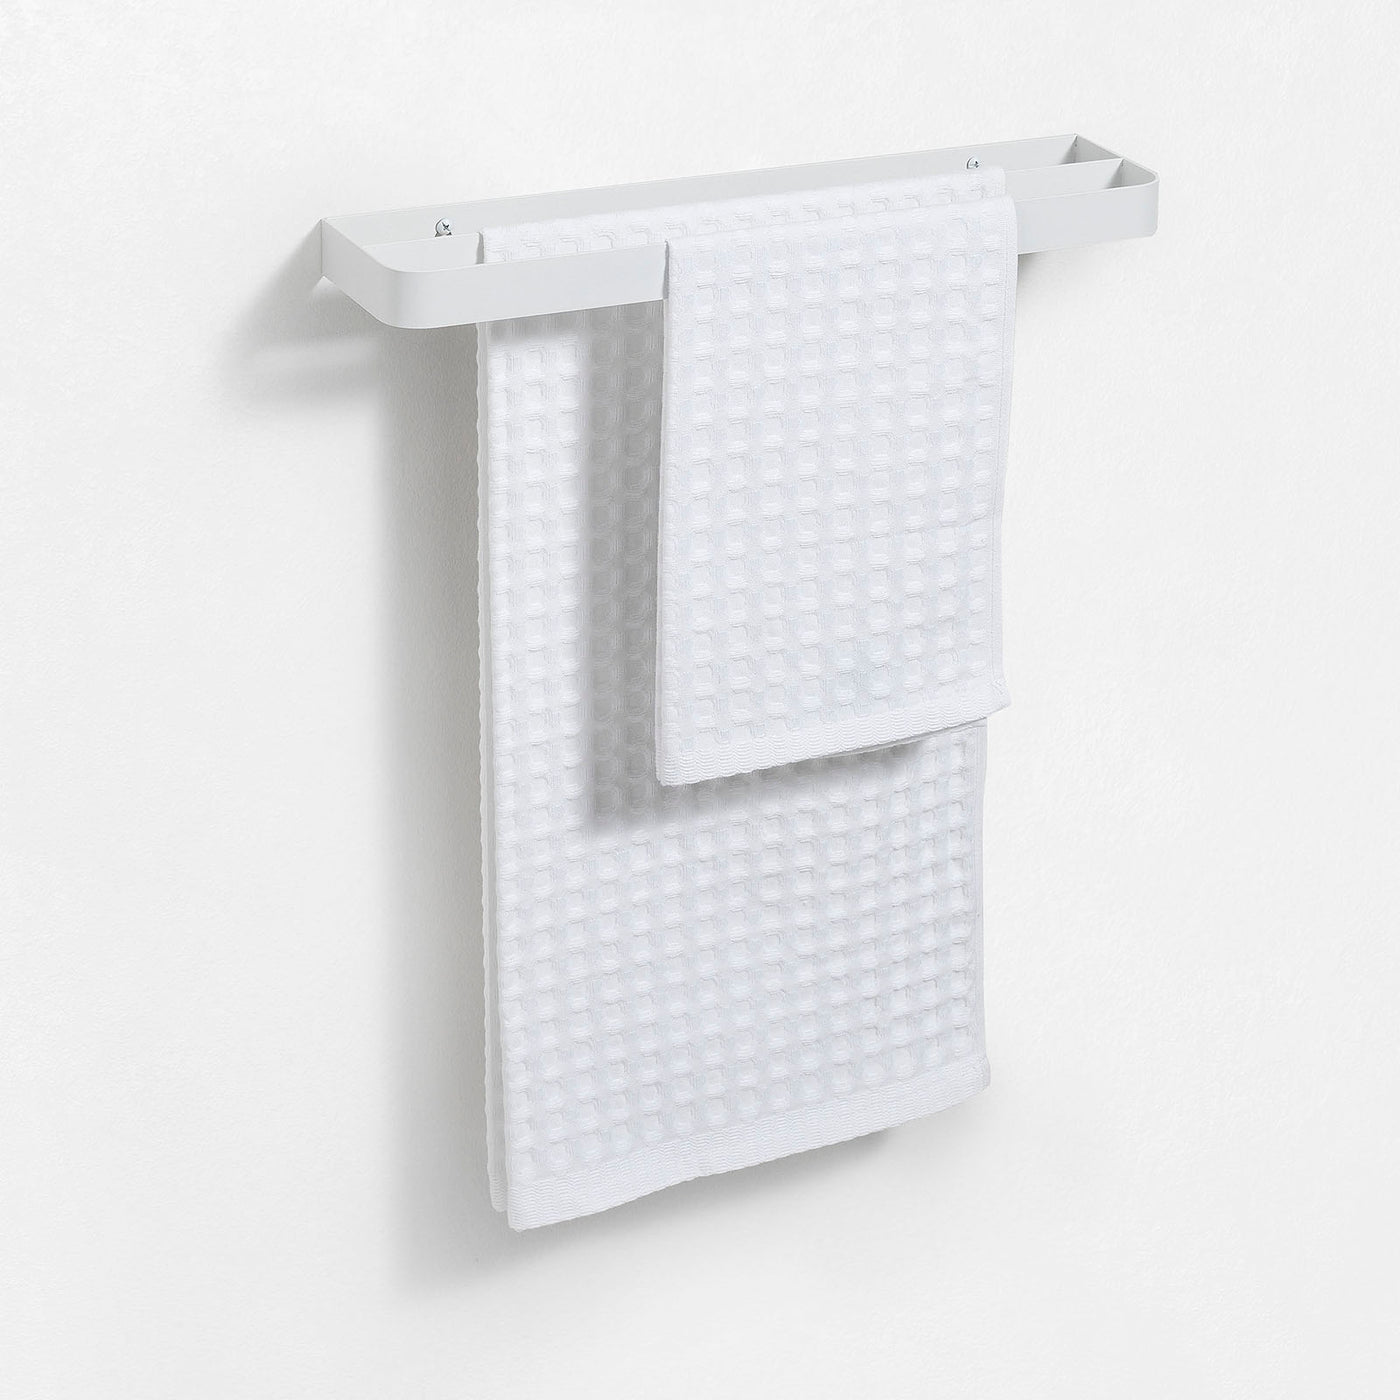 JIRO white wall mounted towel rail 2 rods